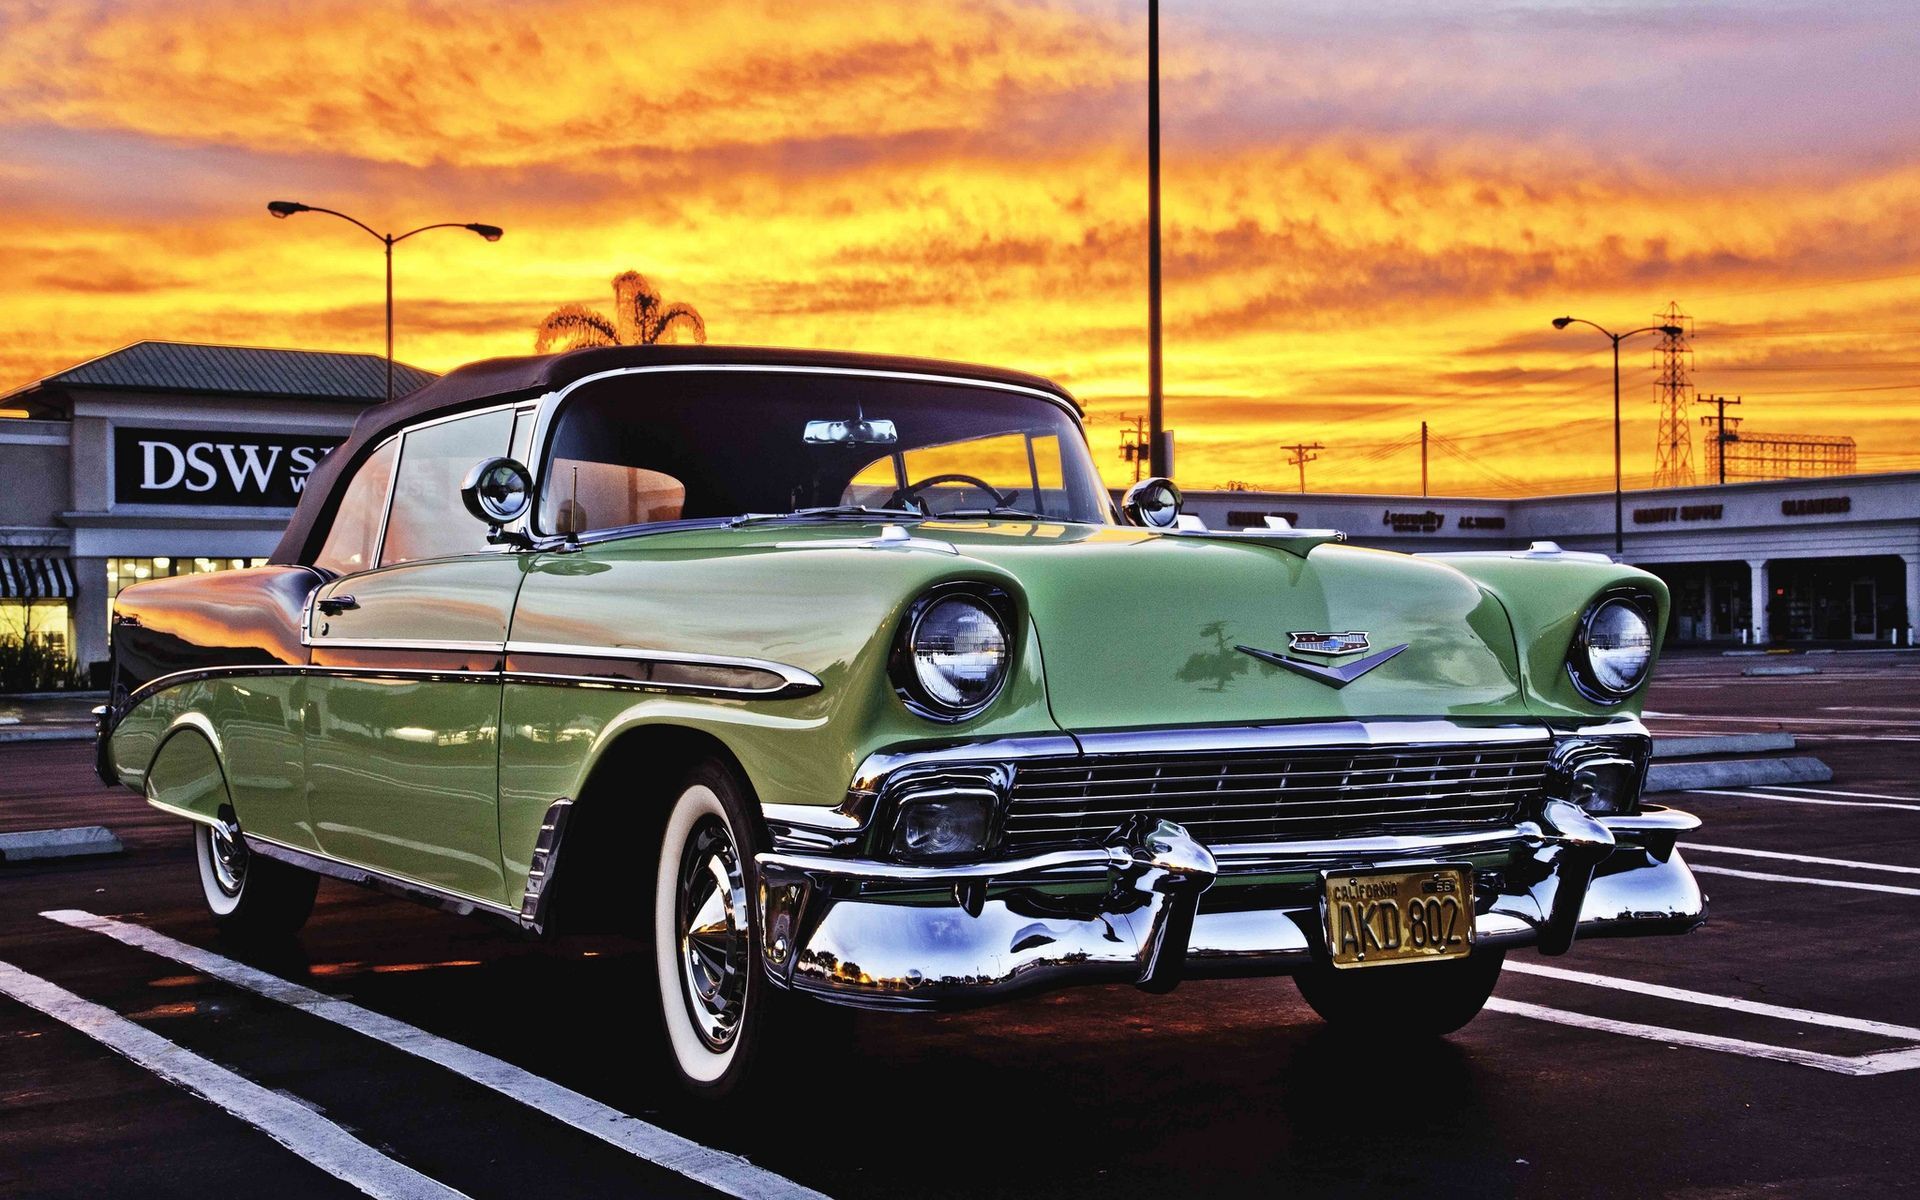 Classic Chevrolet Wallpaper Free #Gzt. Chevrolet wallpaper